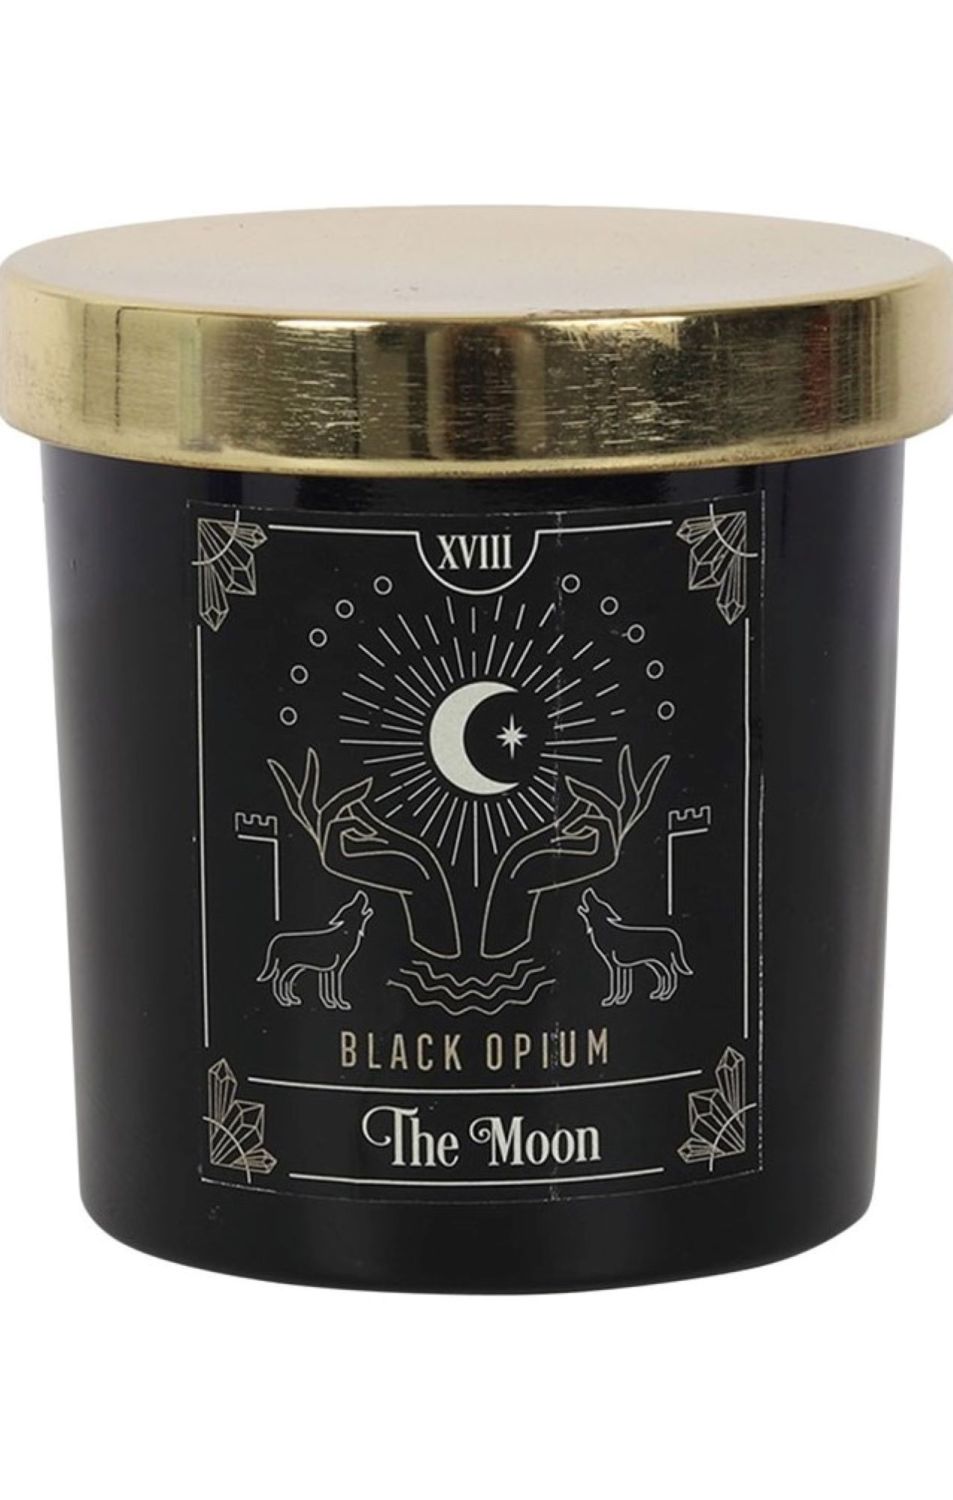 The moon tarot black opium candle RRP £11.99